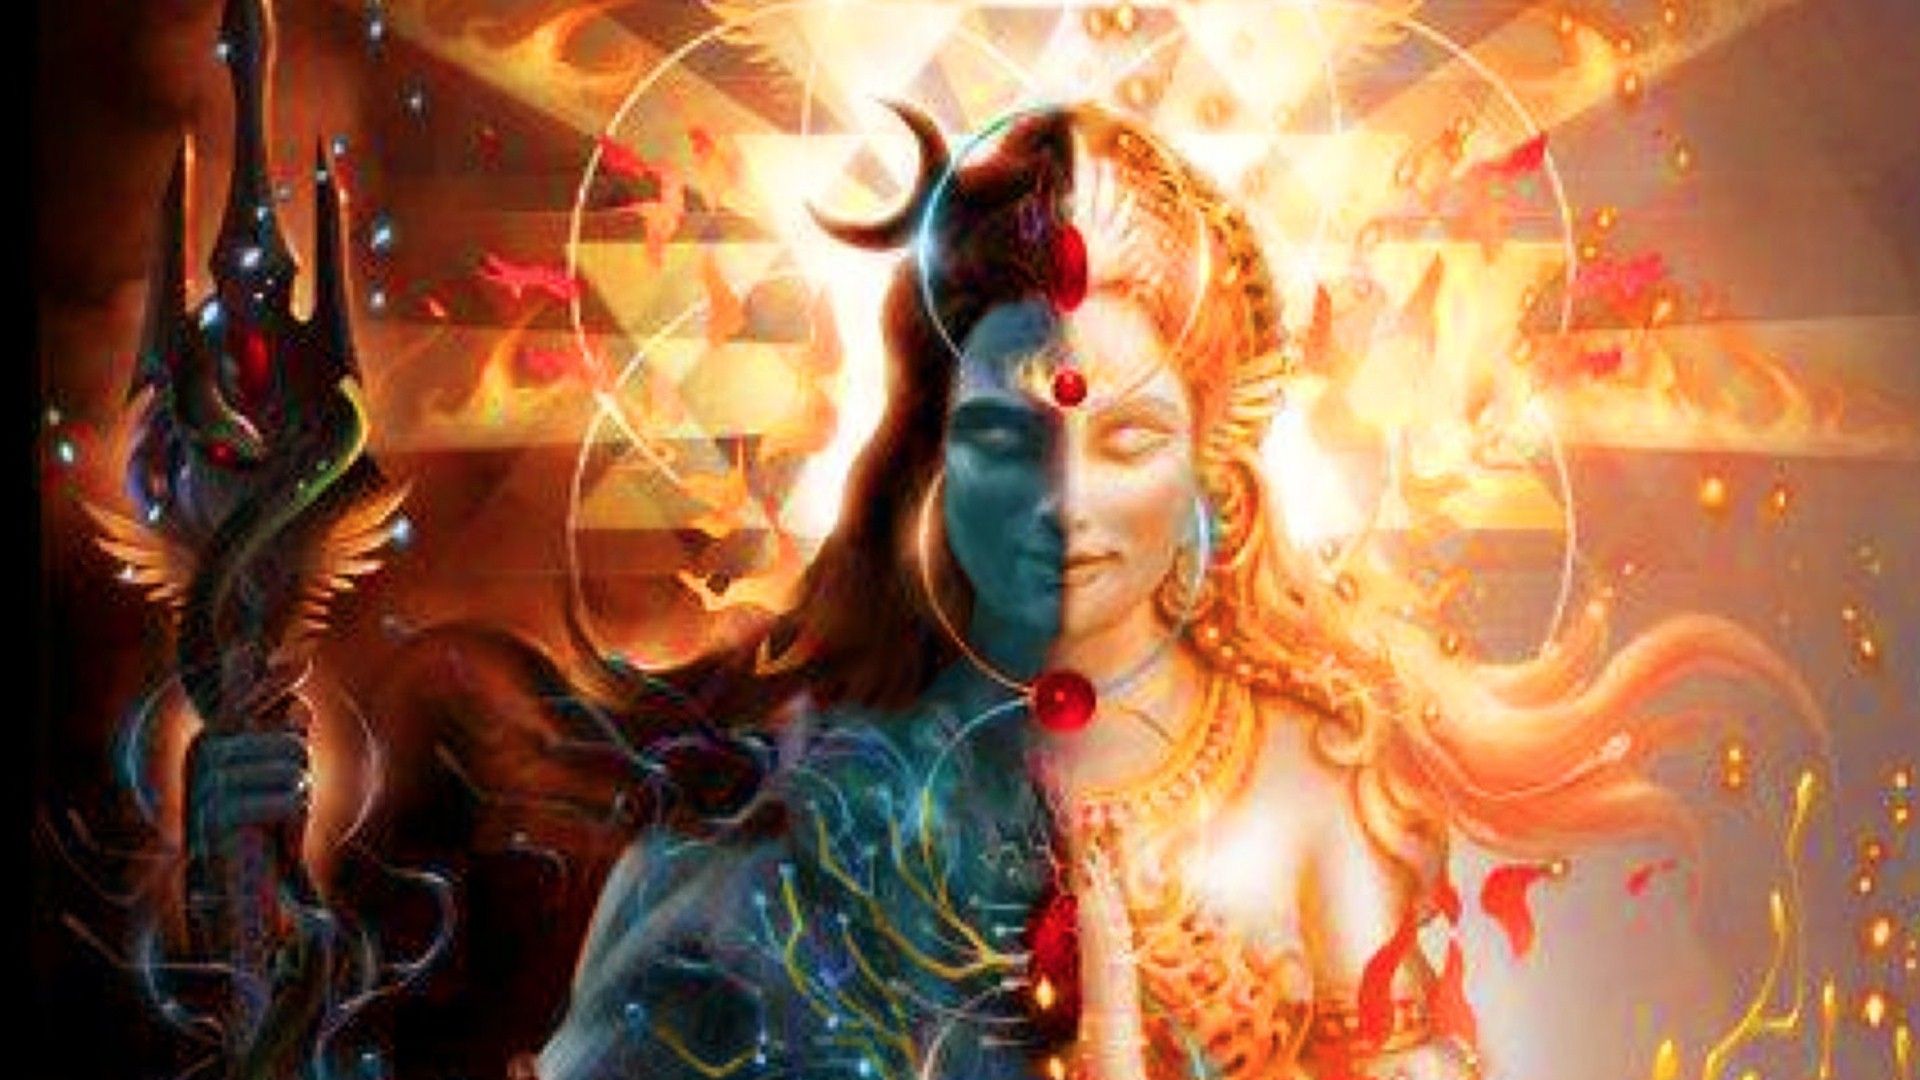 Wallpaper of God Ardhanarishvara Shiva and Parvati